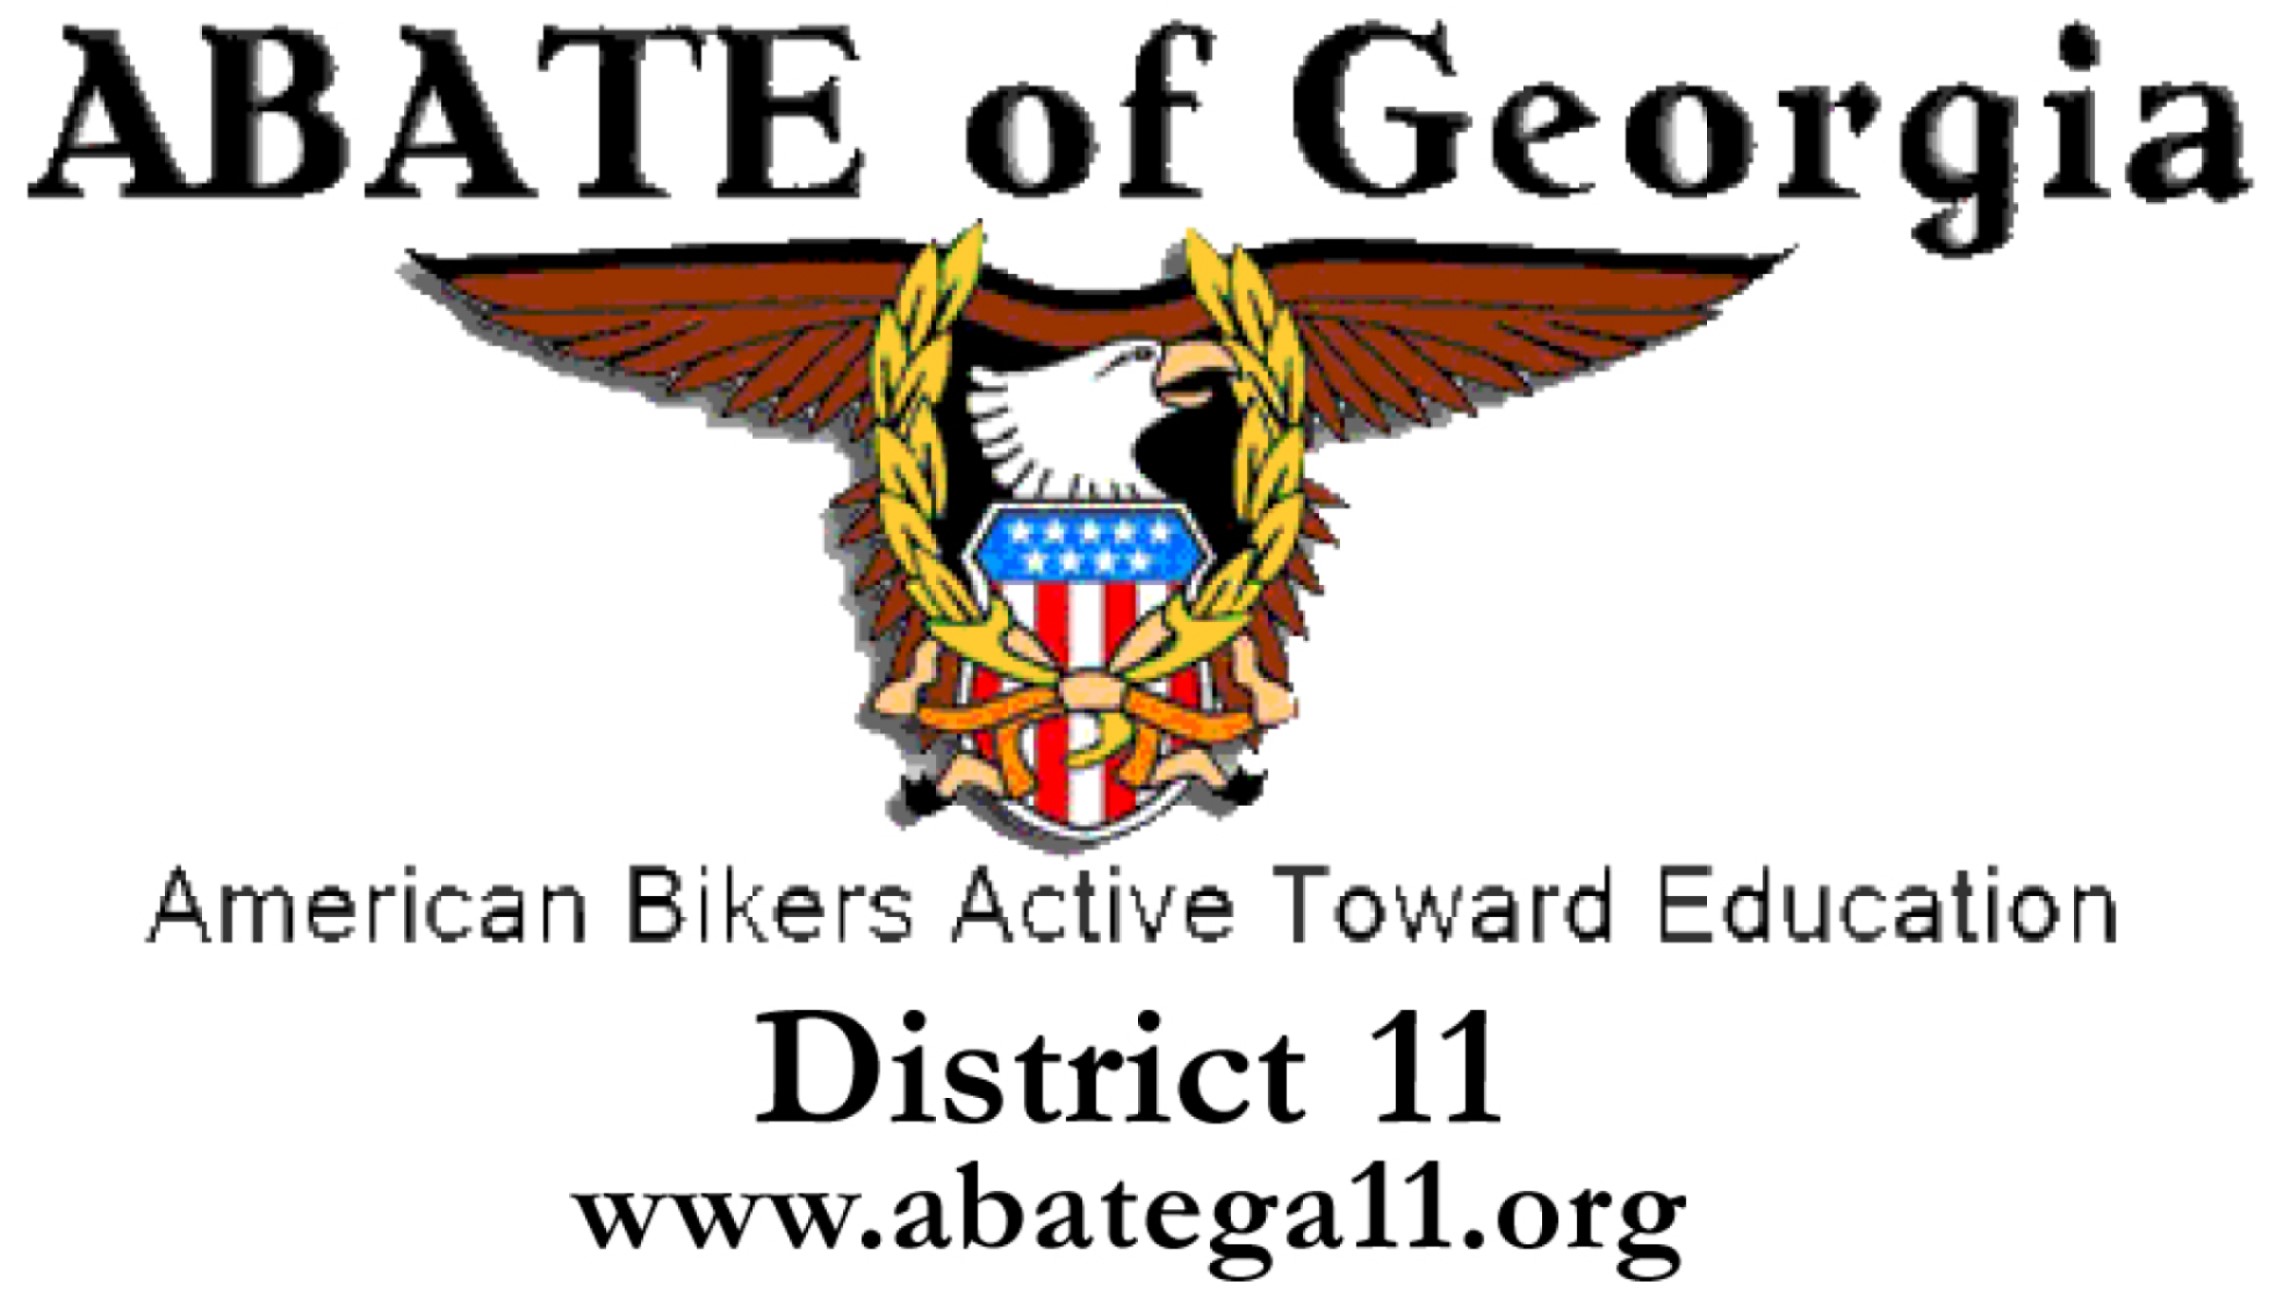 ABATE of Georgia, District 11 Monthly Meeting @ VFW Post 660 | Savannah | Georgia | United States